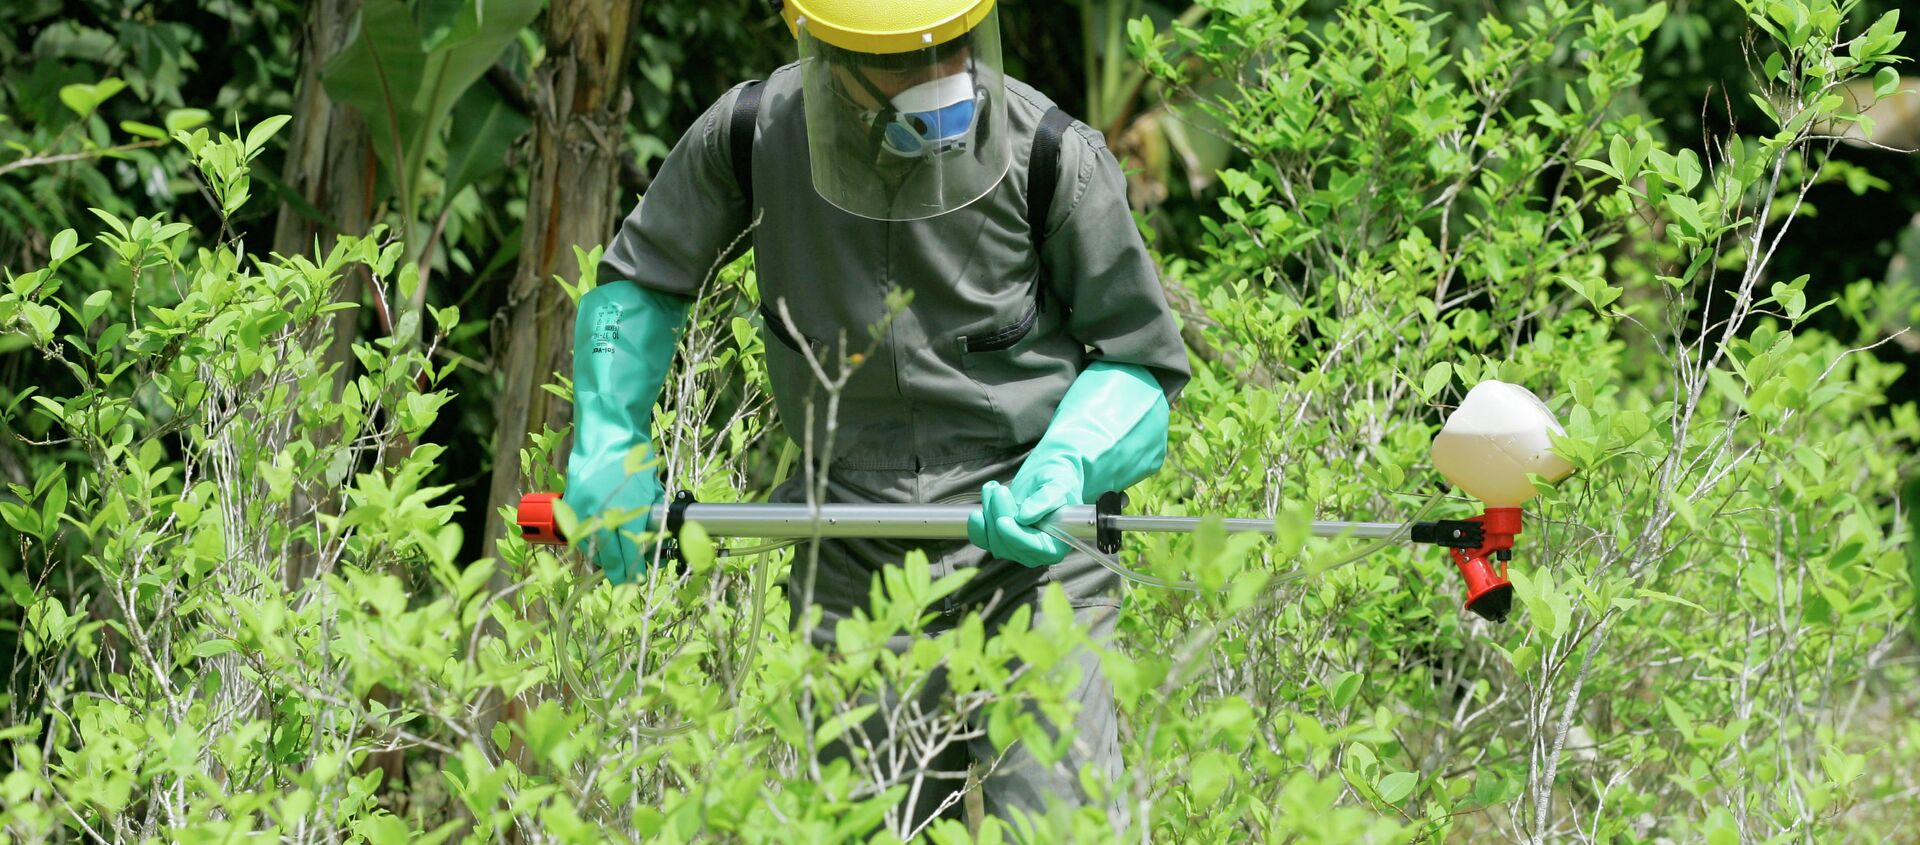 A counter-narcotics police officer sprays herbicide over a coca plant during a campaign to eradicate coca crops in La Espriella, southern Colombia. - Sputnik Mundo, 1920, 16.09.2020